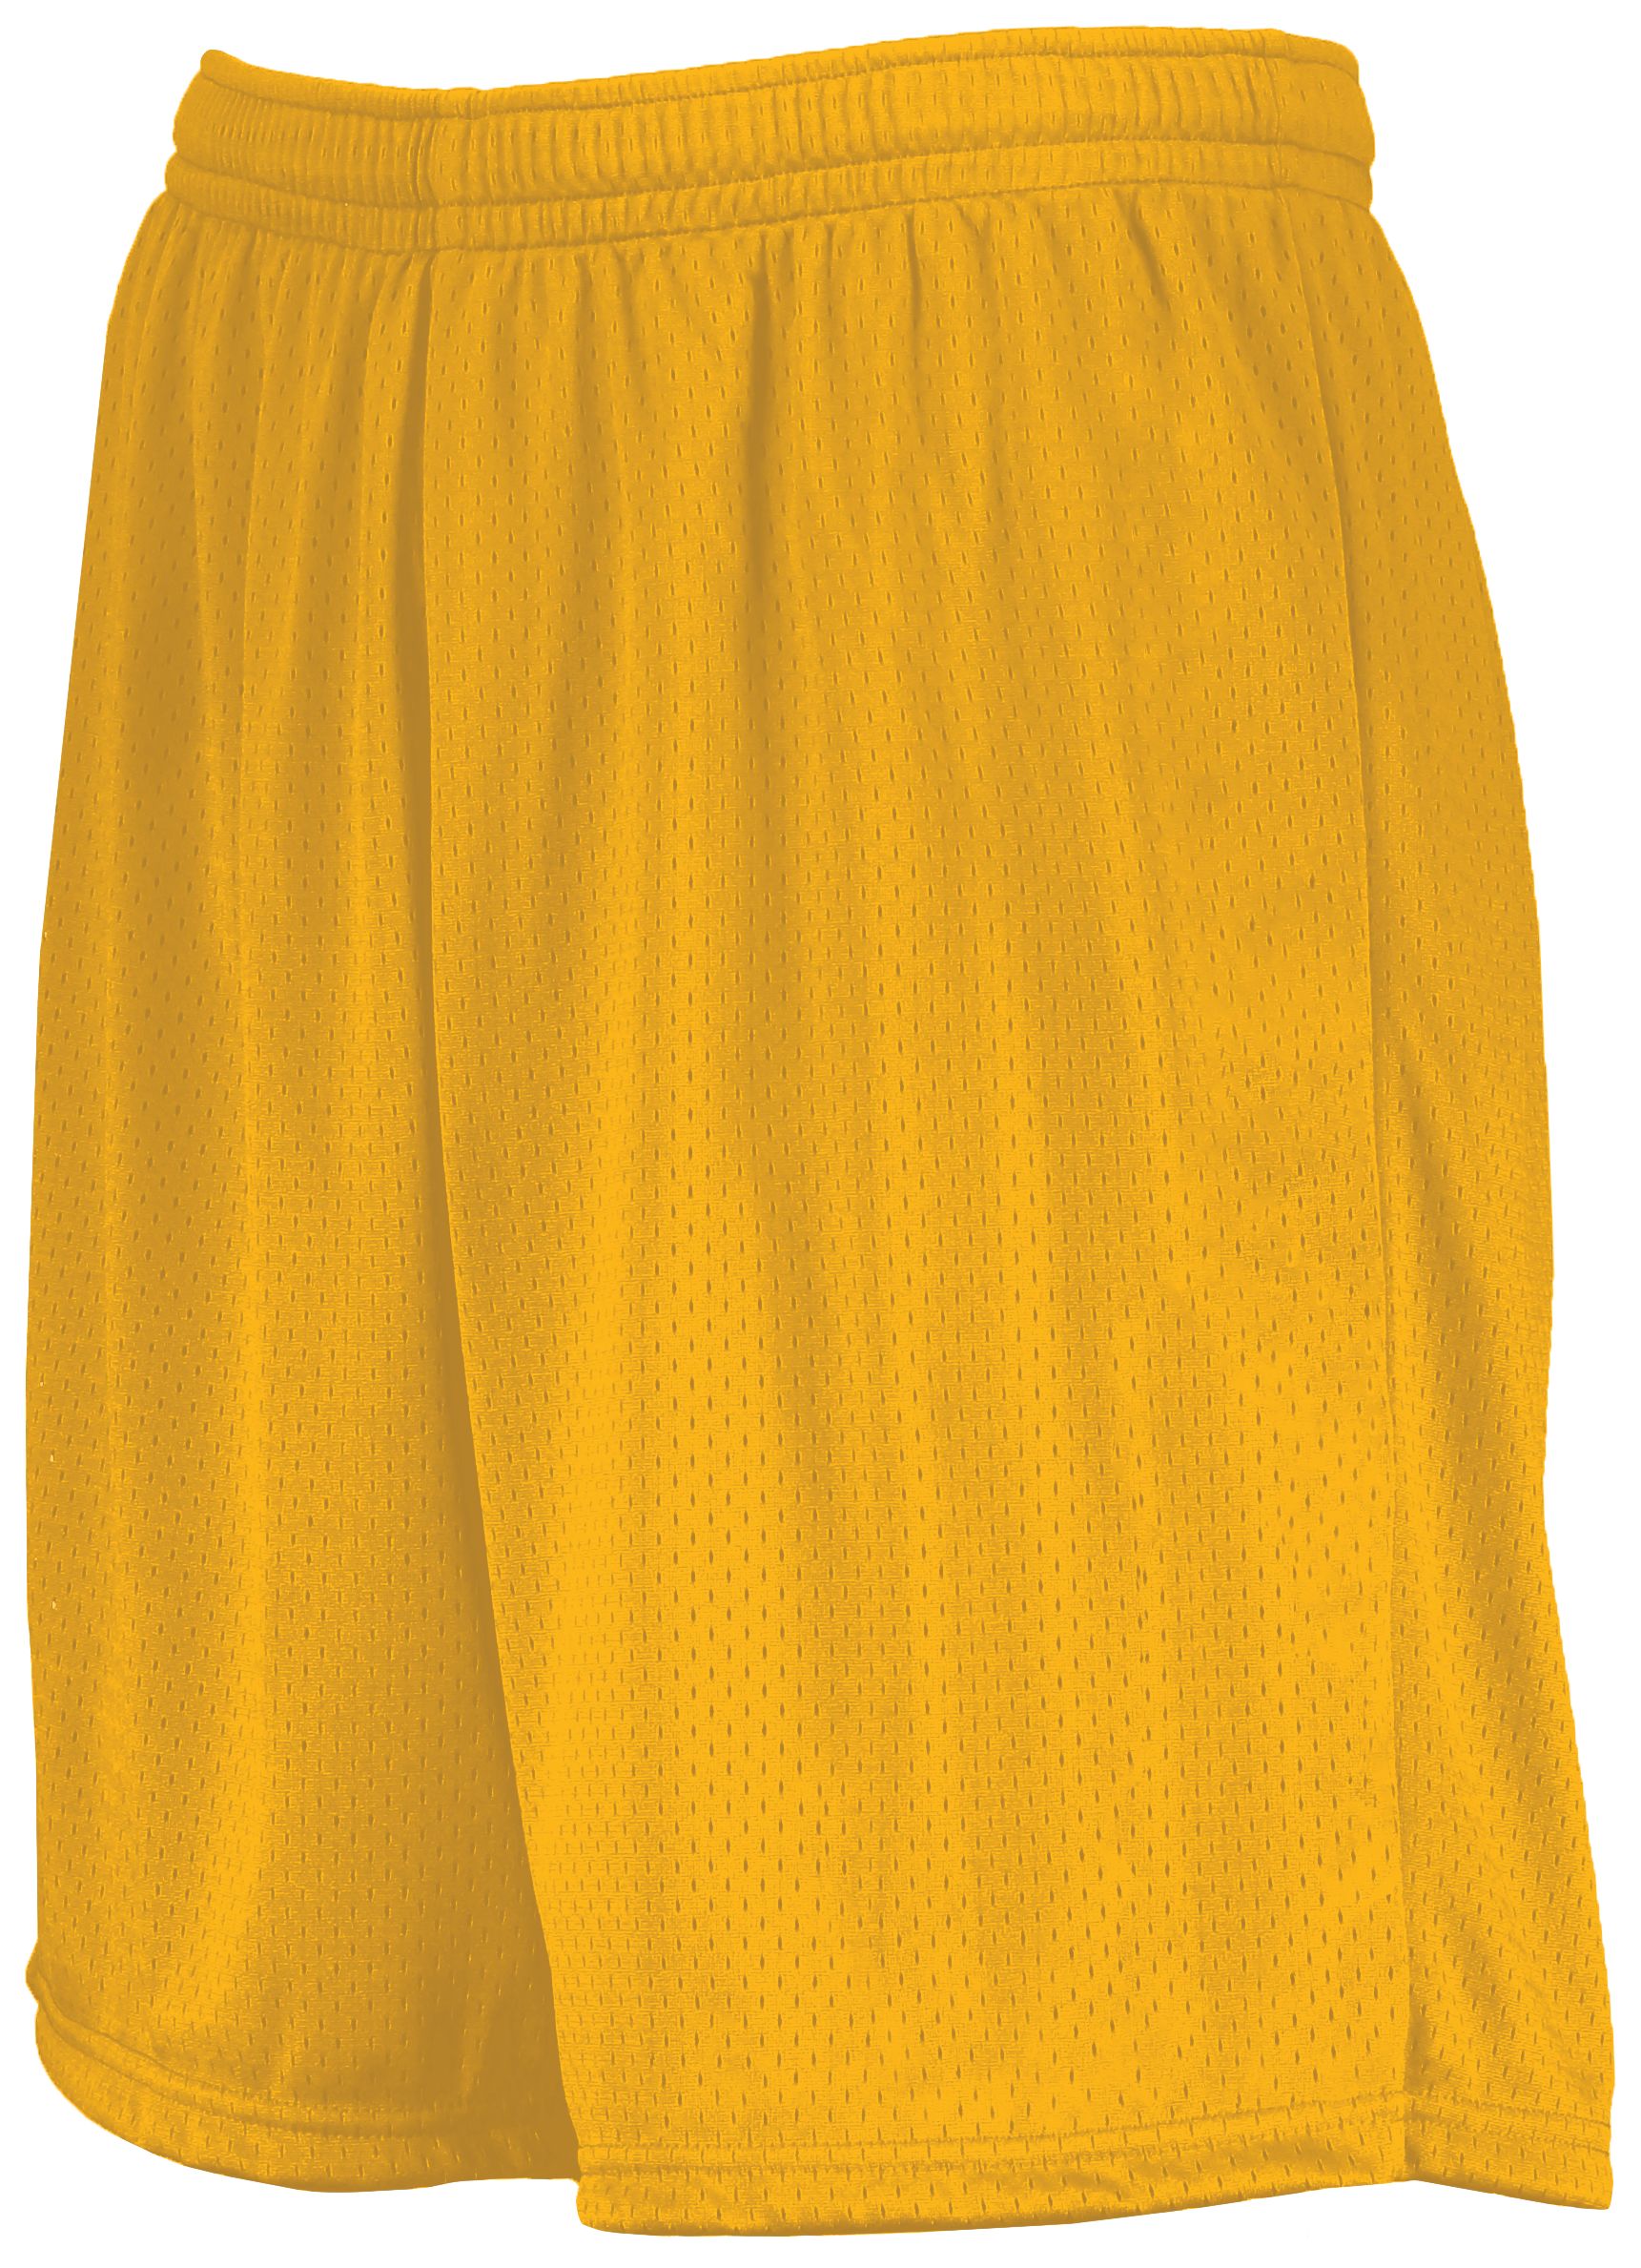 Augusta Sportswear 1850 - 7-Inch Modified Mesh Shorts